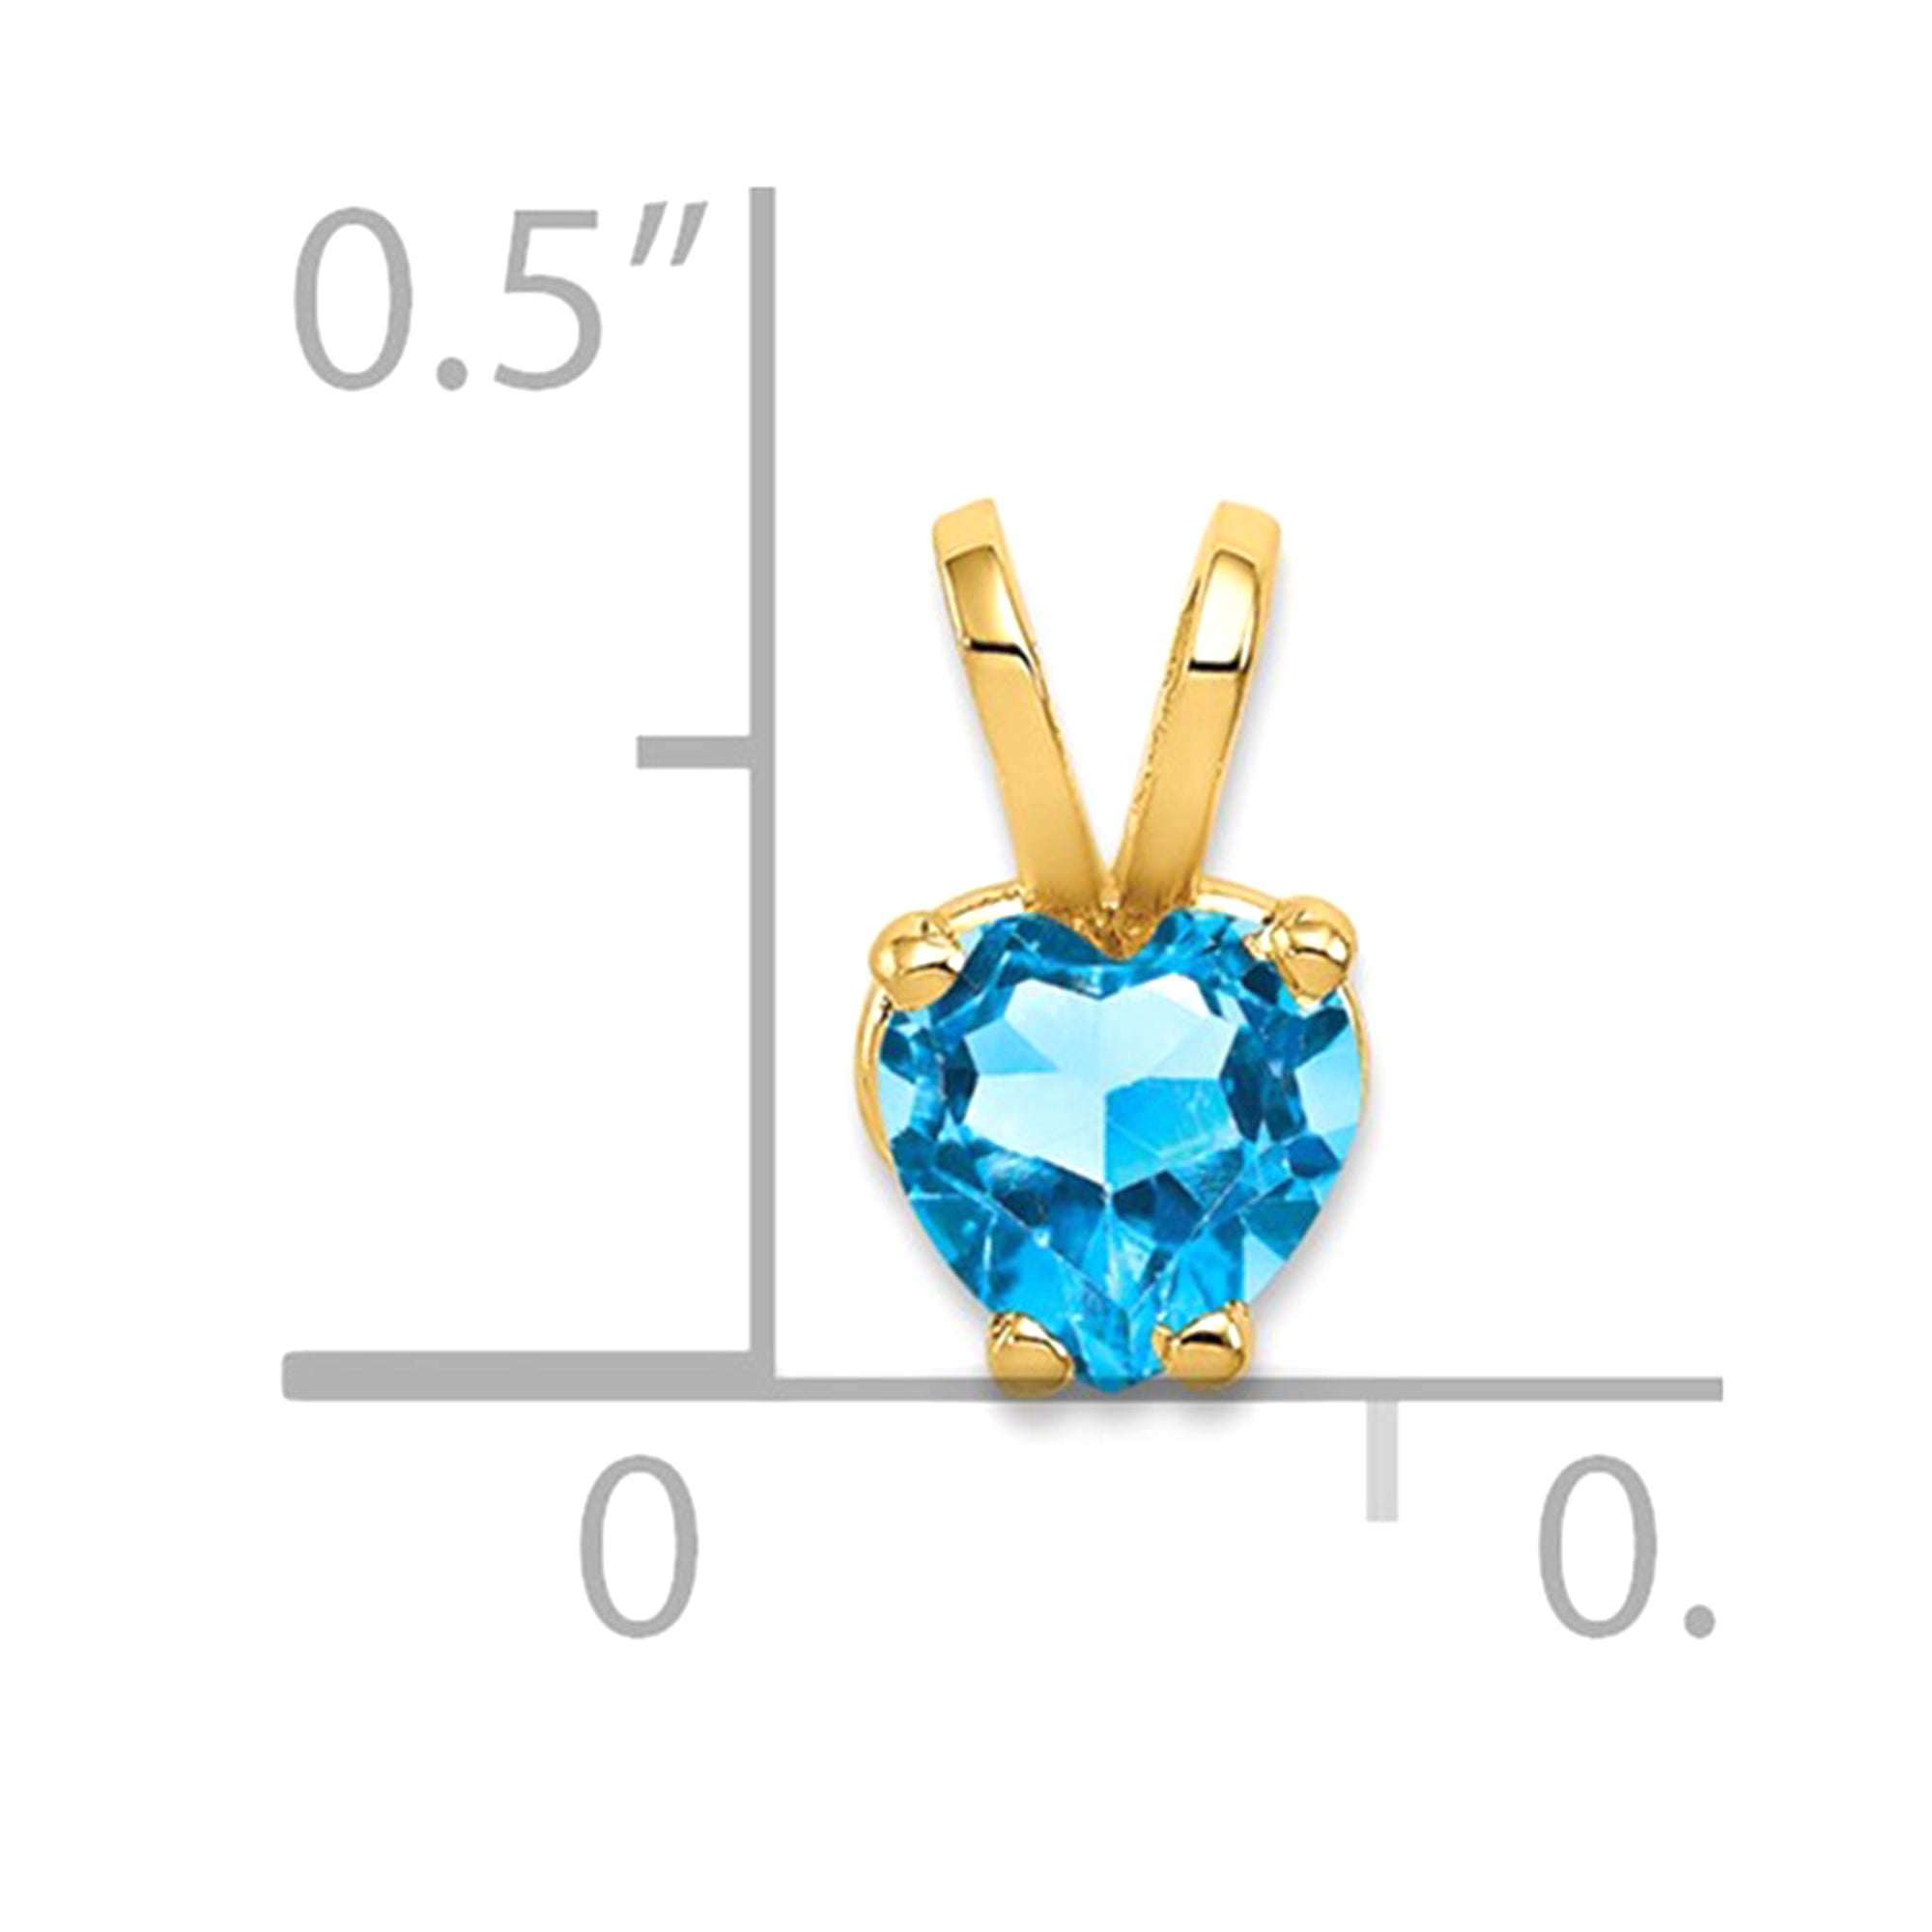 Real 14k Yellow Gold Heart Birthstone Gemstone Pendant Charm fine designer jewelry for men and women